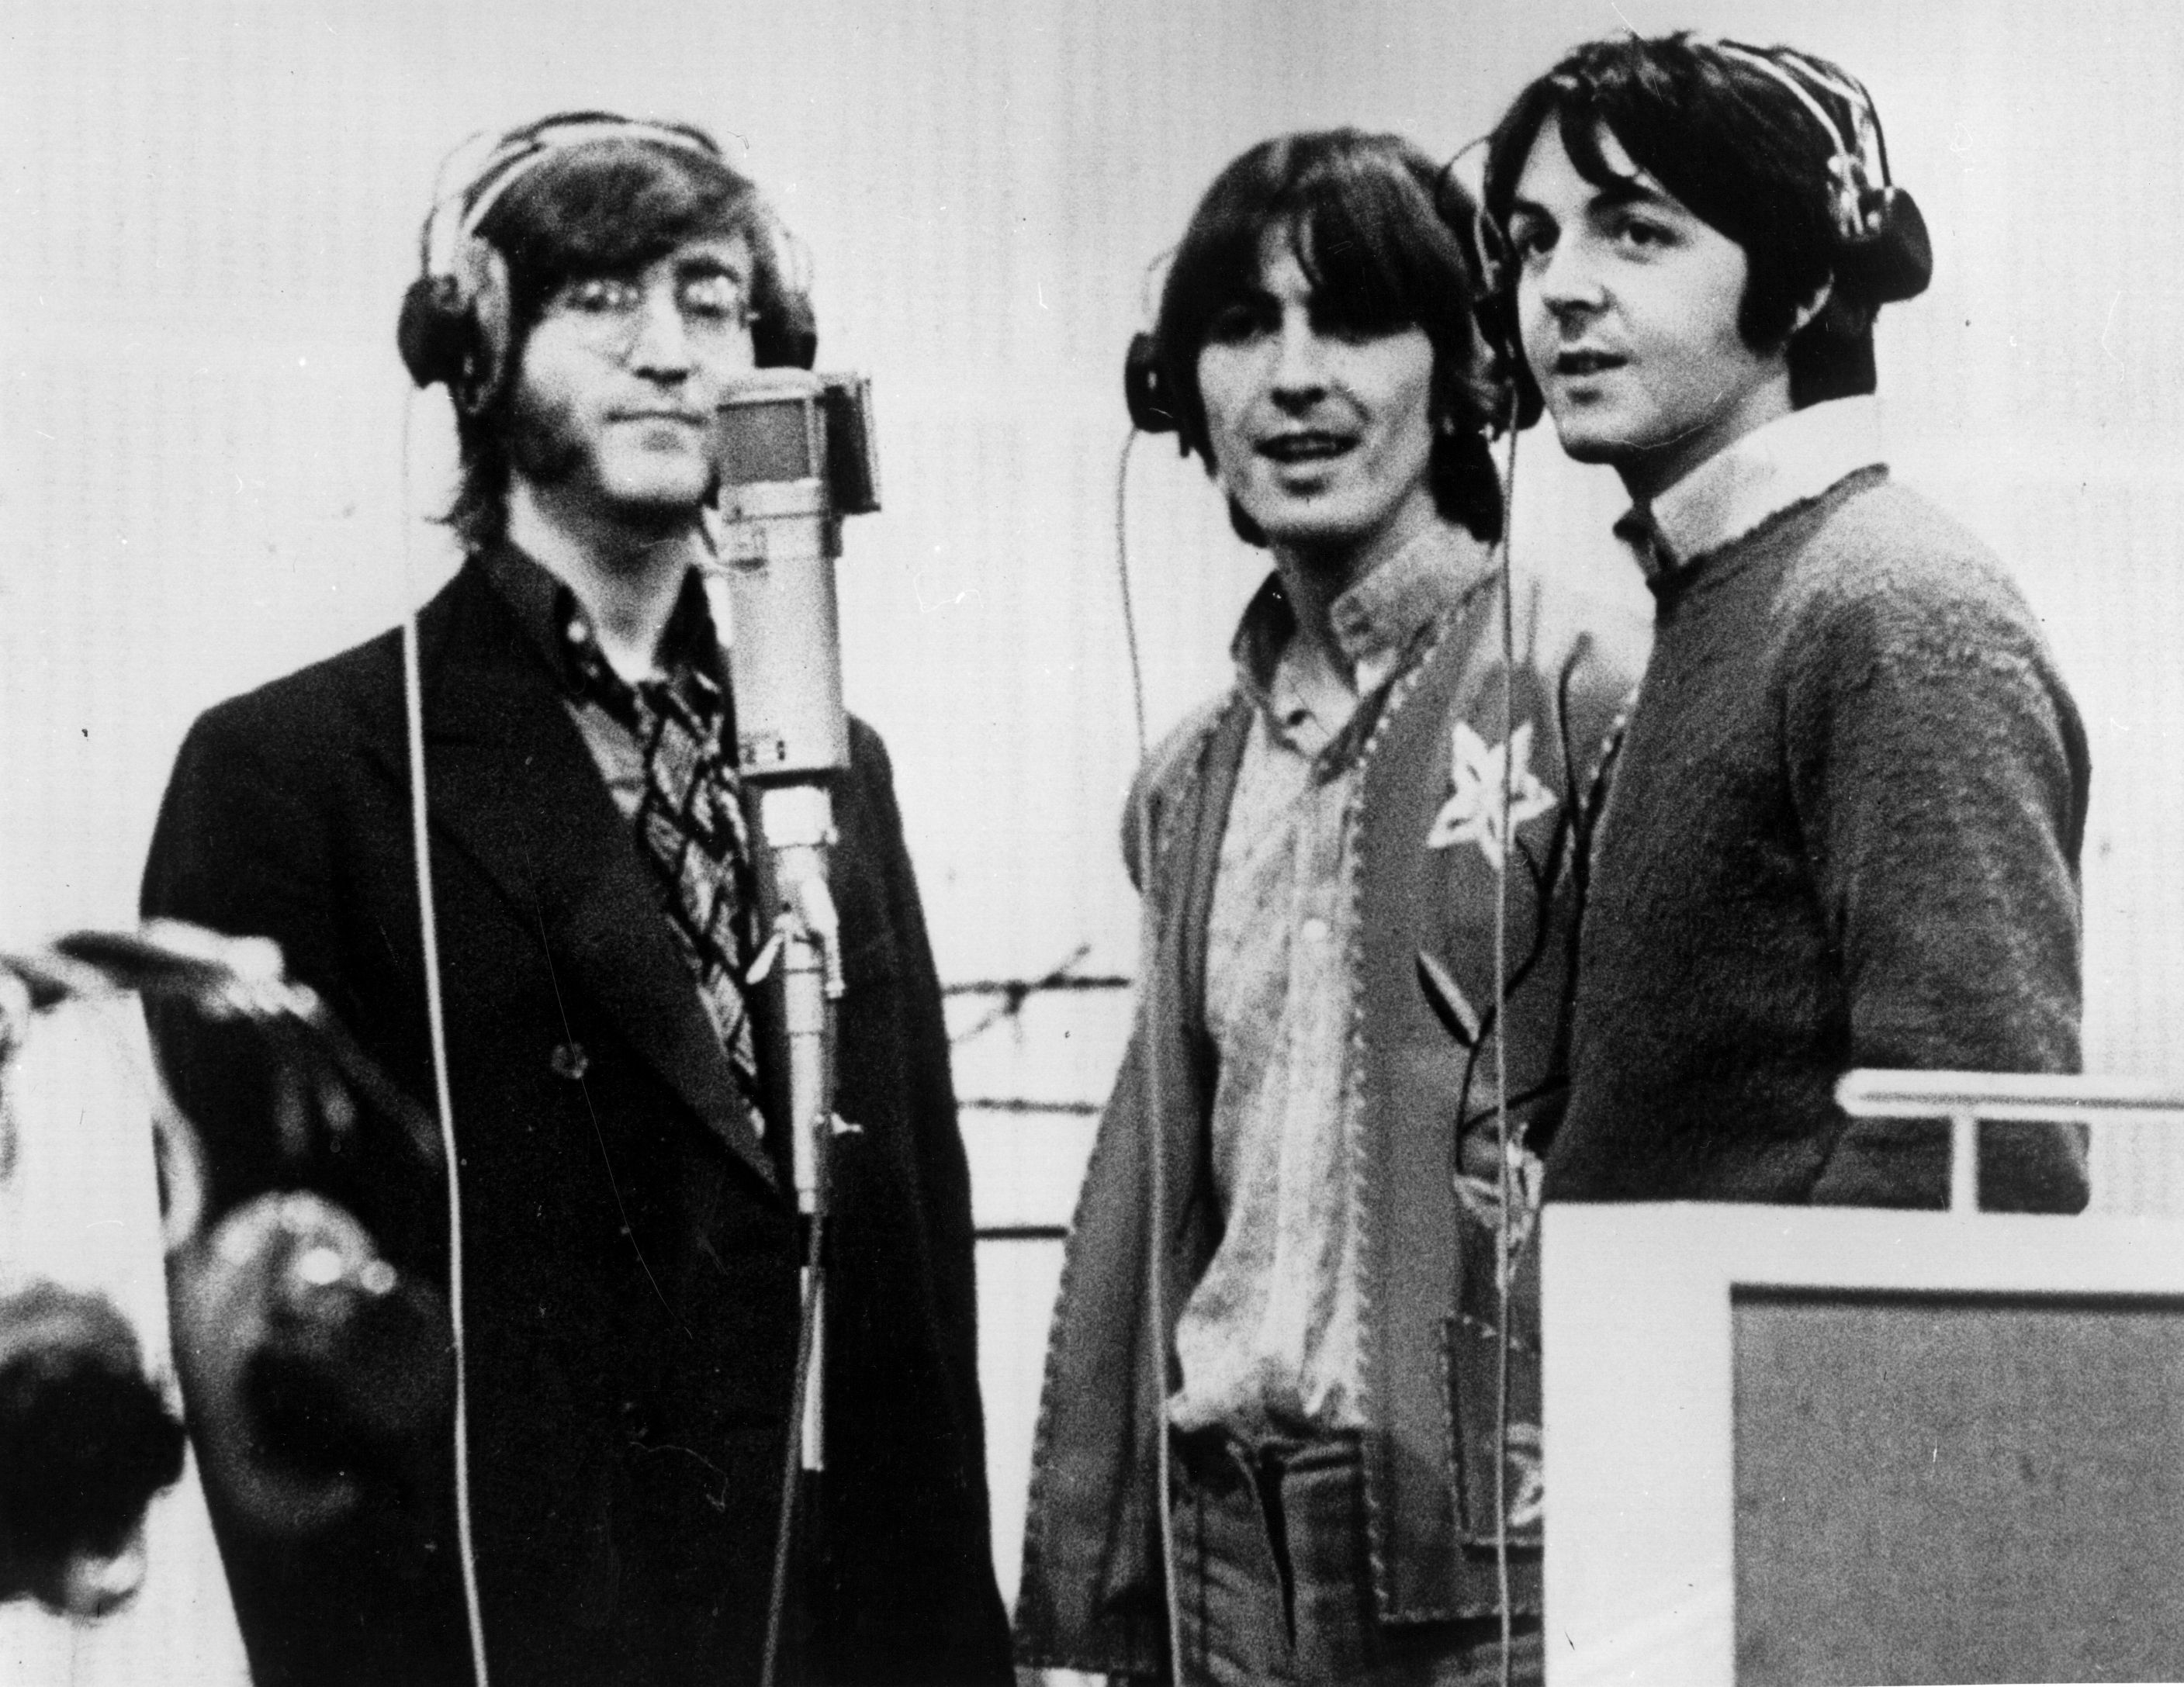 John Lennon, George Harrison, and Paul McCartney near a microphone during The Beatles' 'The White Album' era